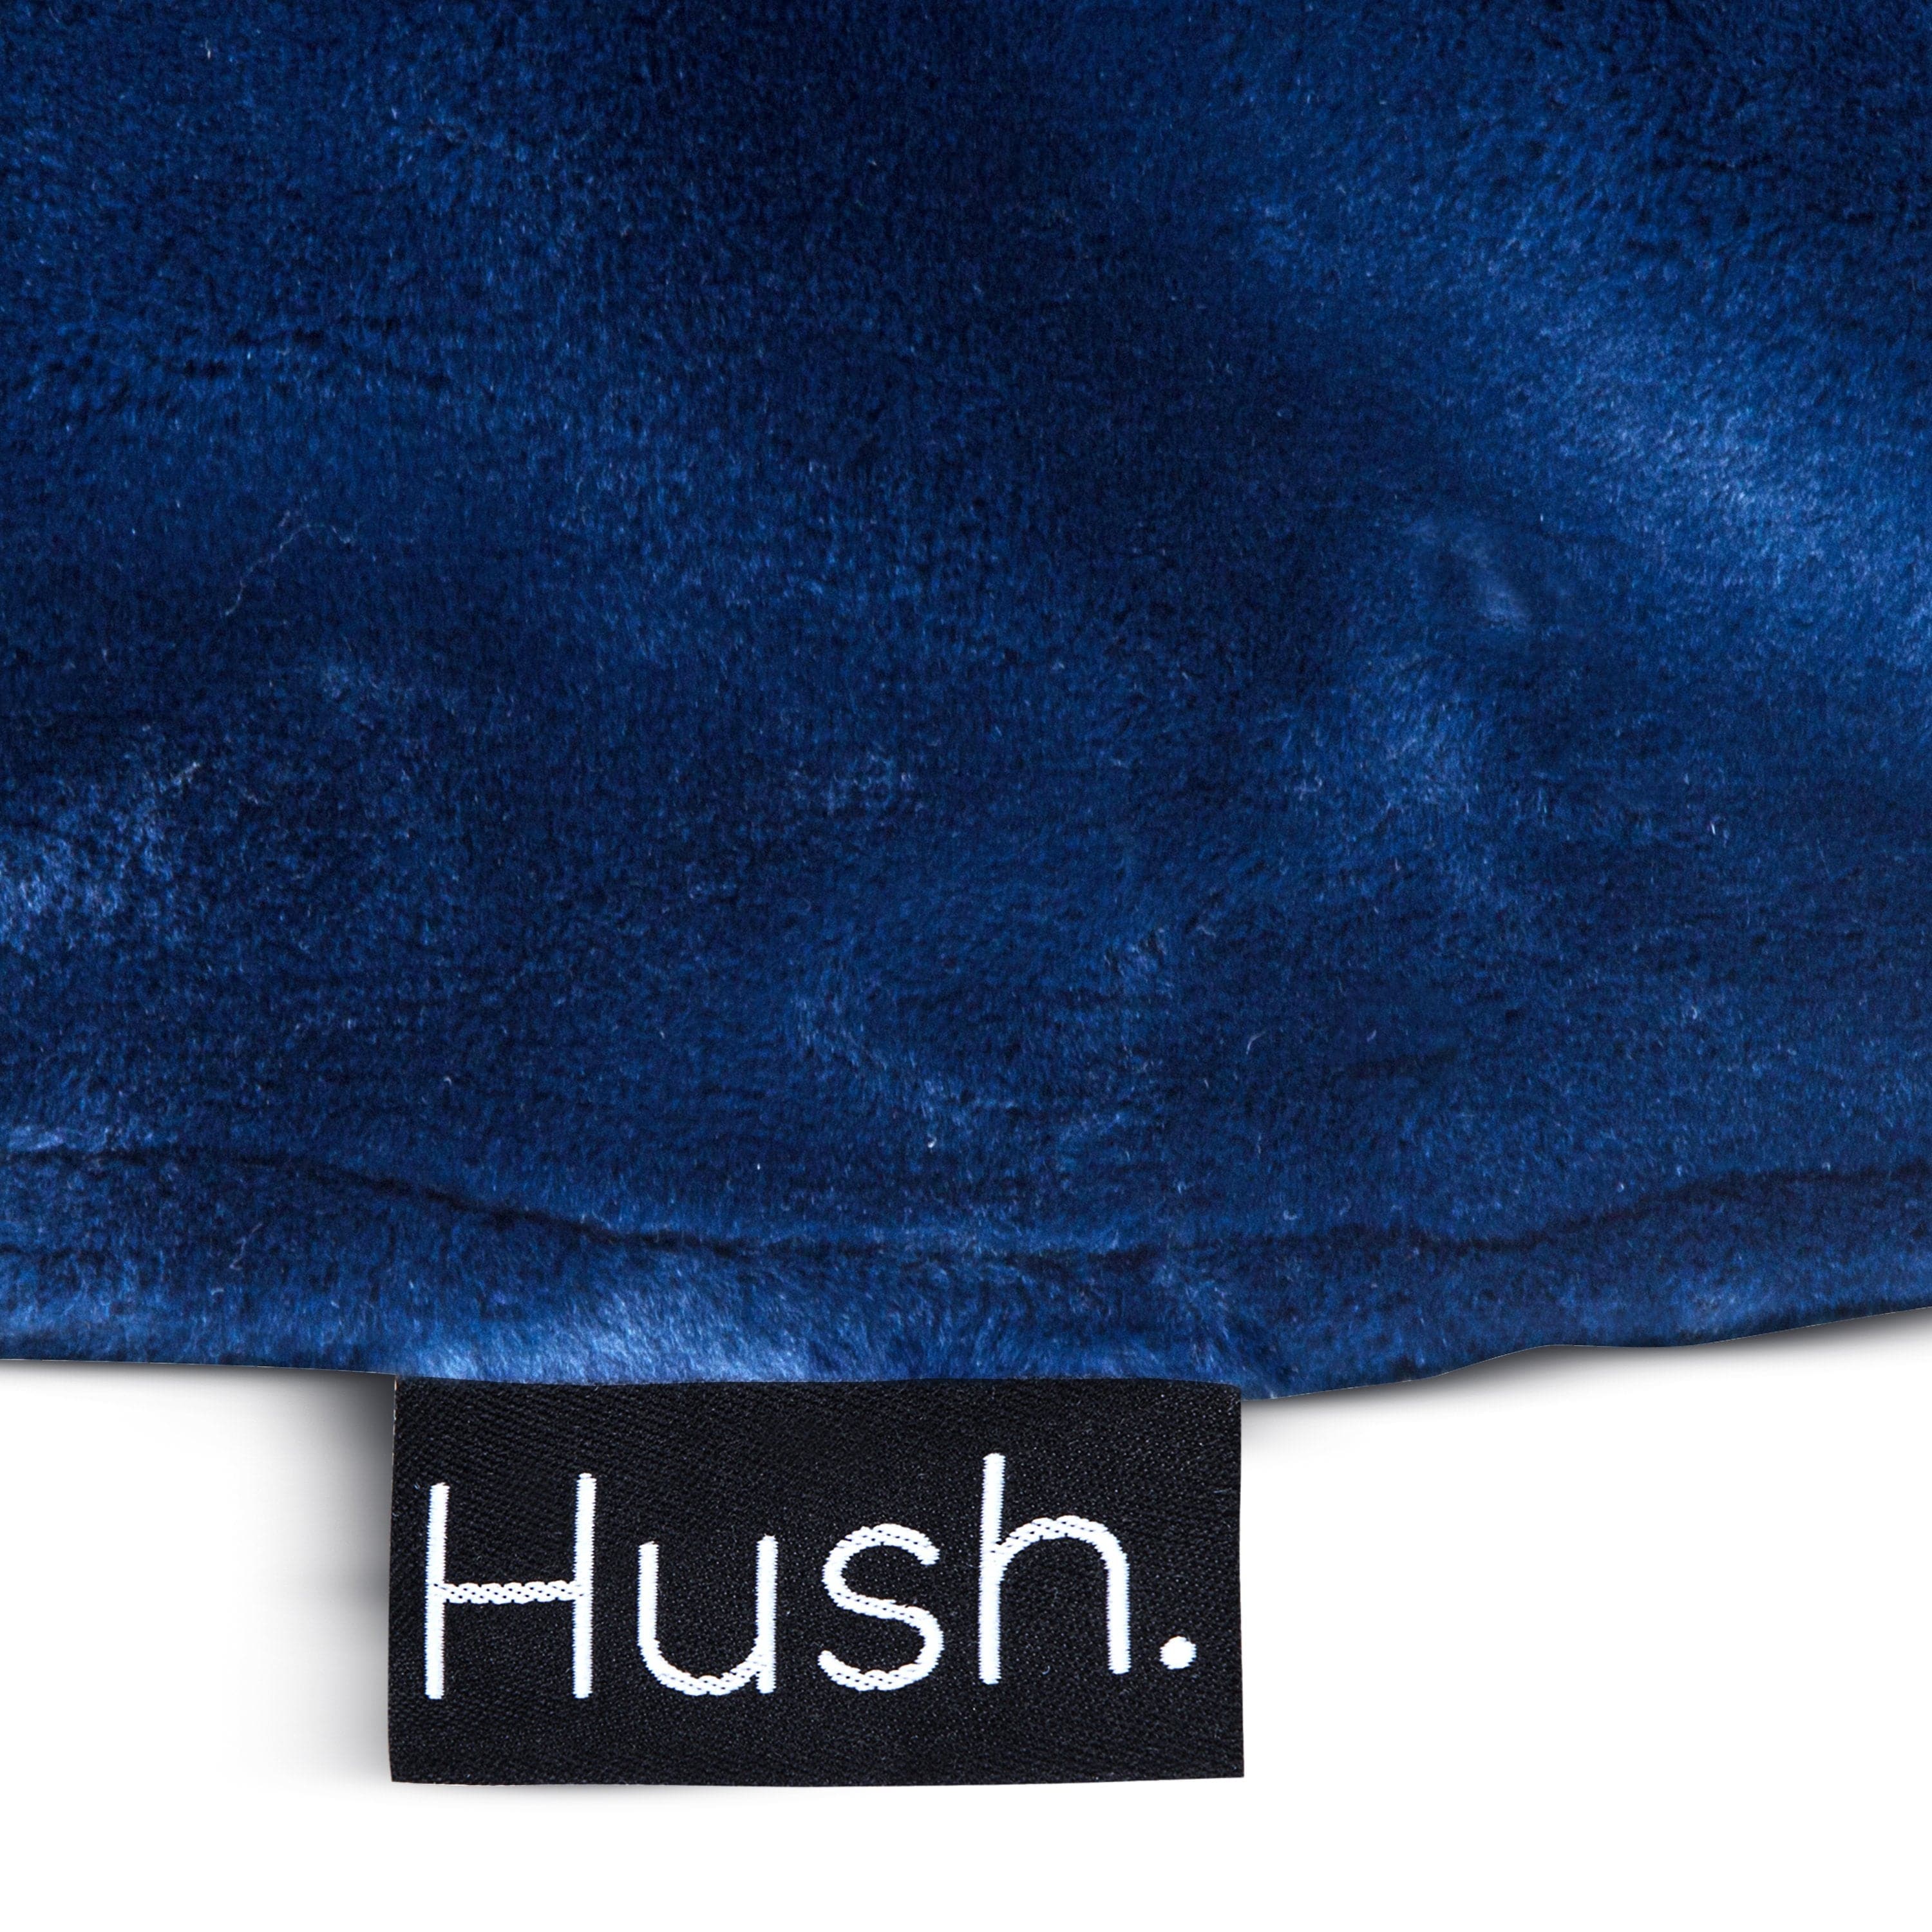 Order The Hush Blanket Online in Canada